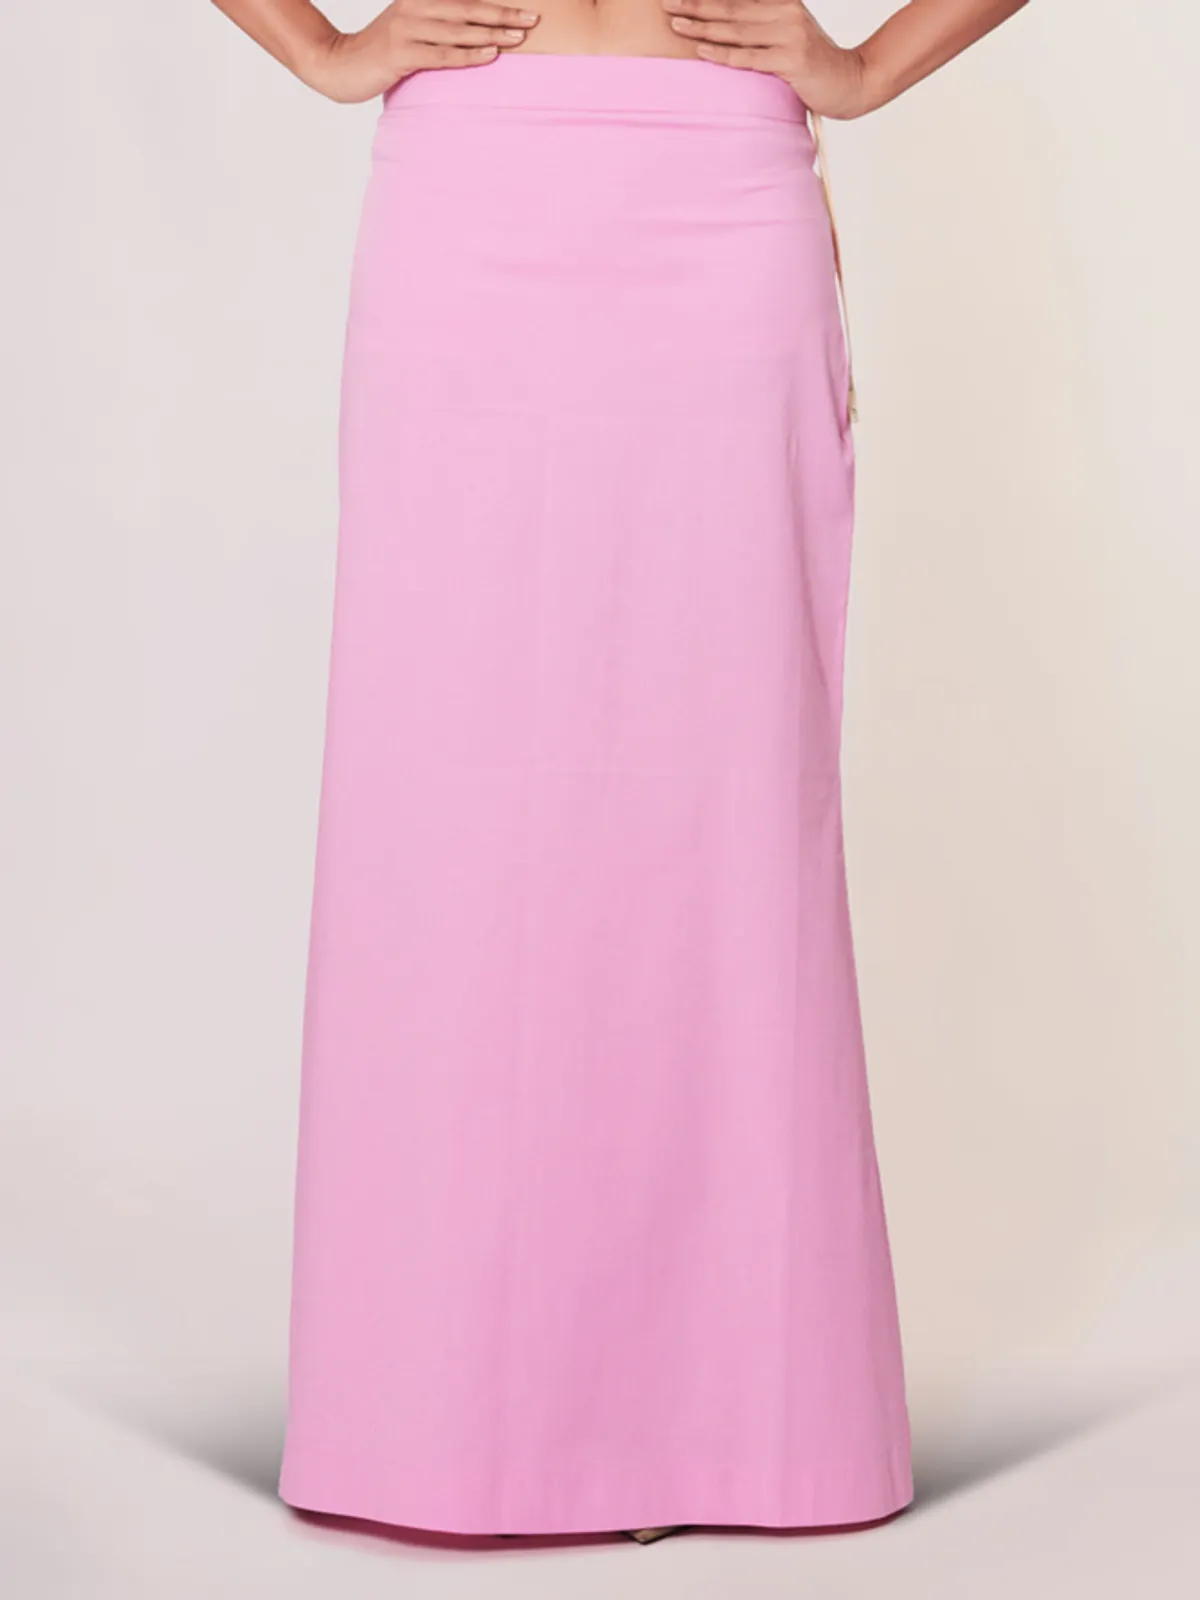 Pink lycra cotton plain saree shaper